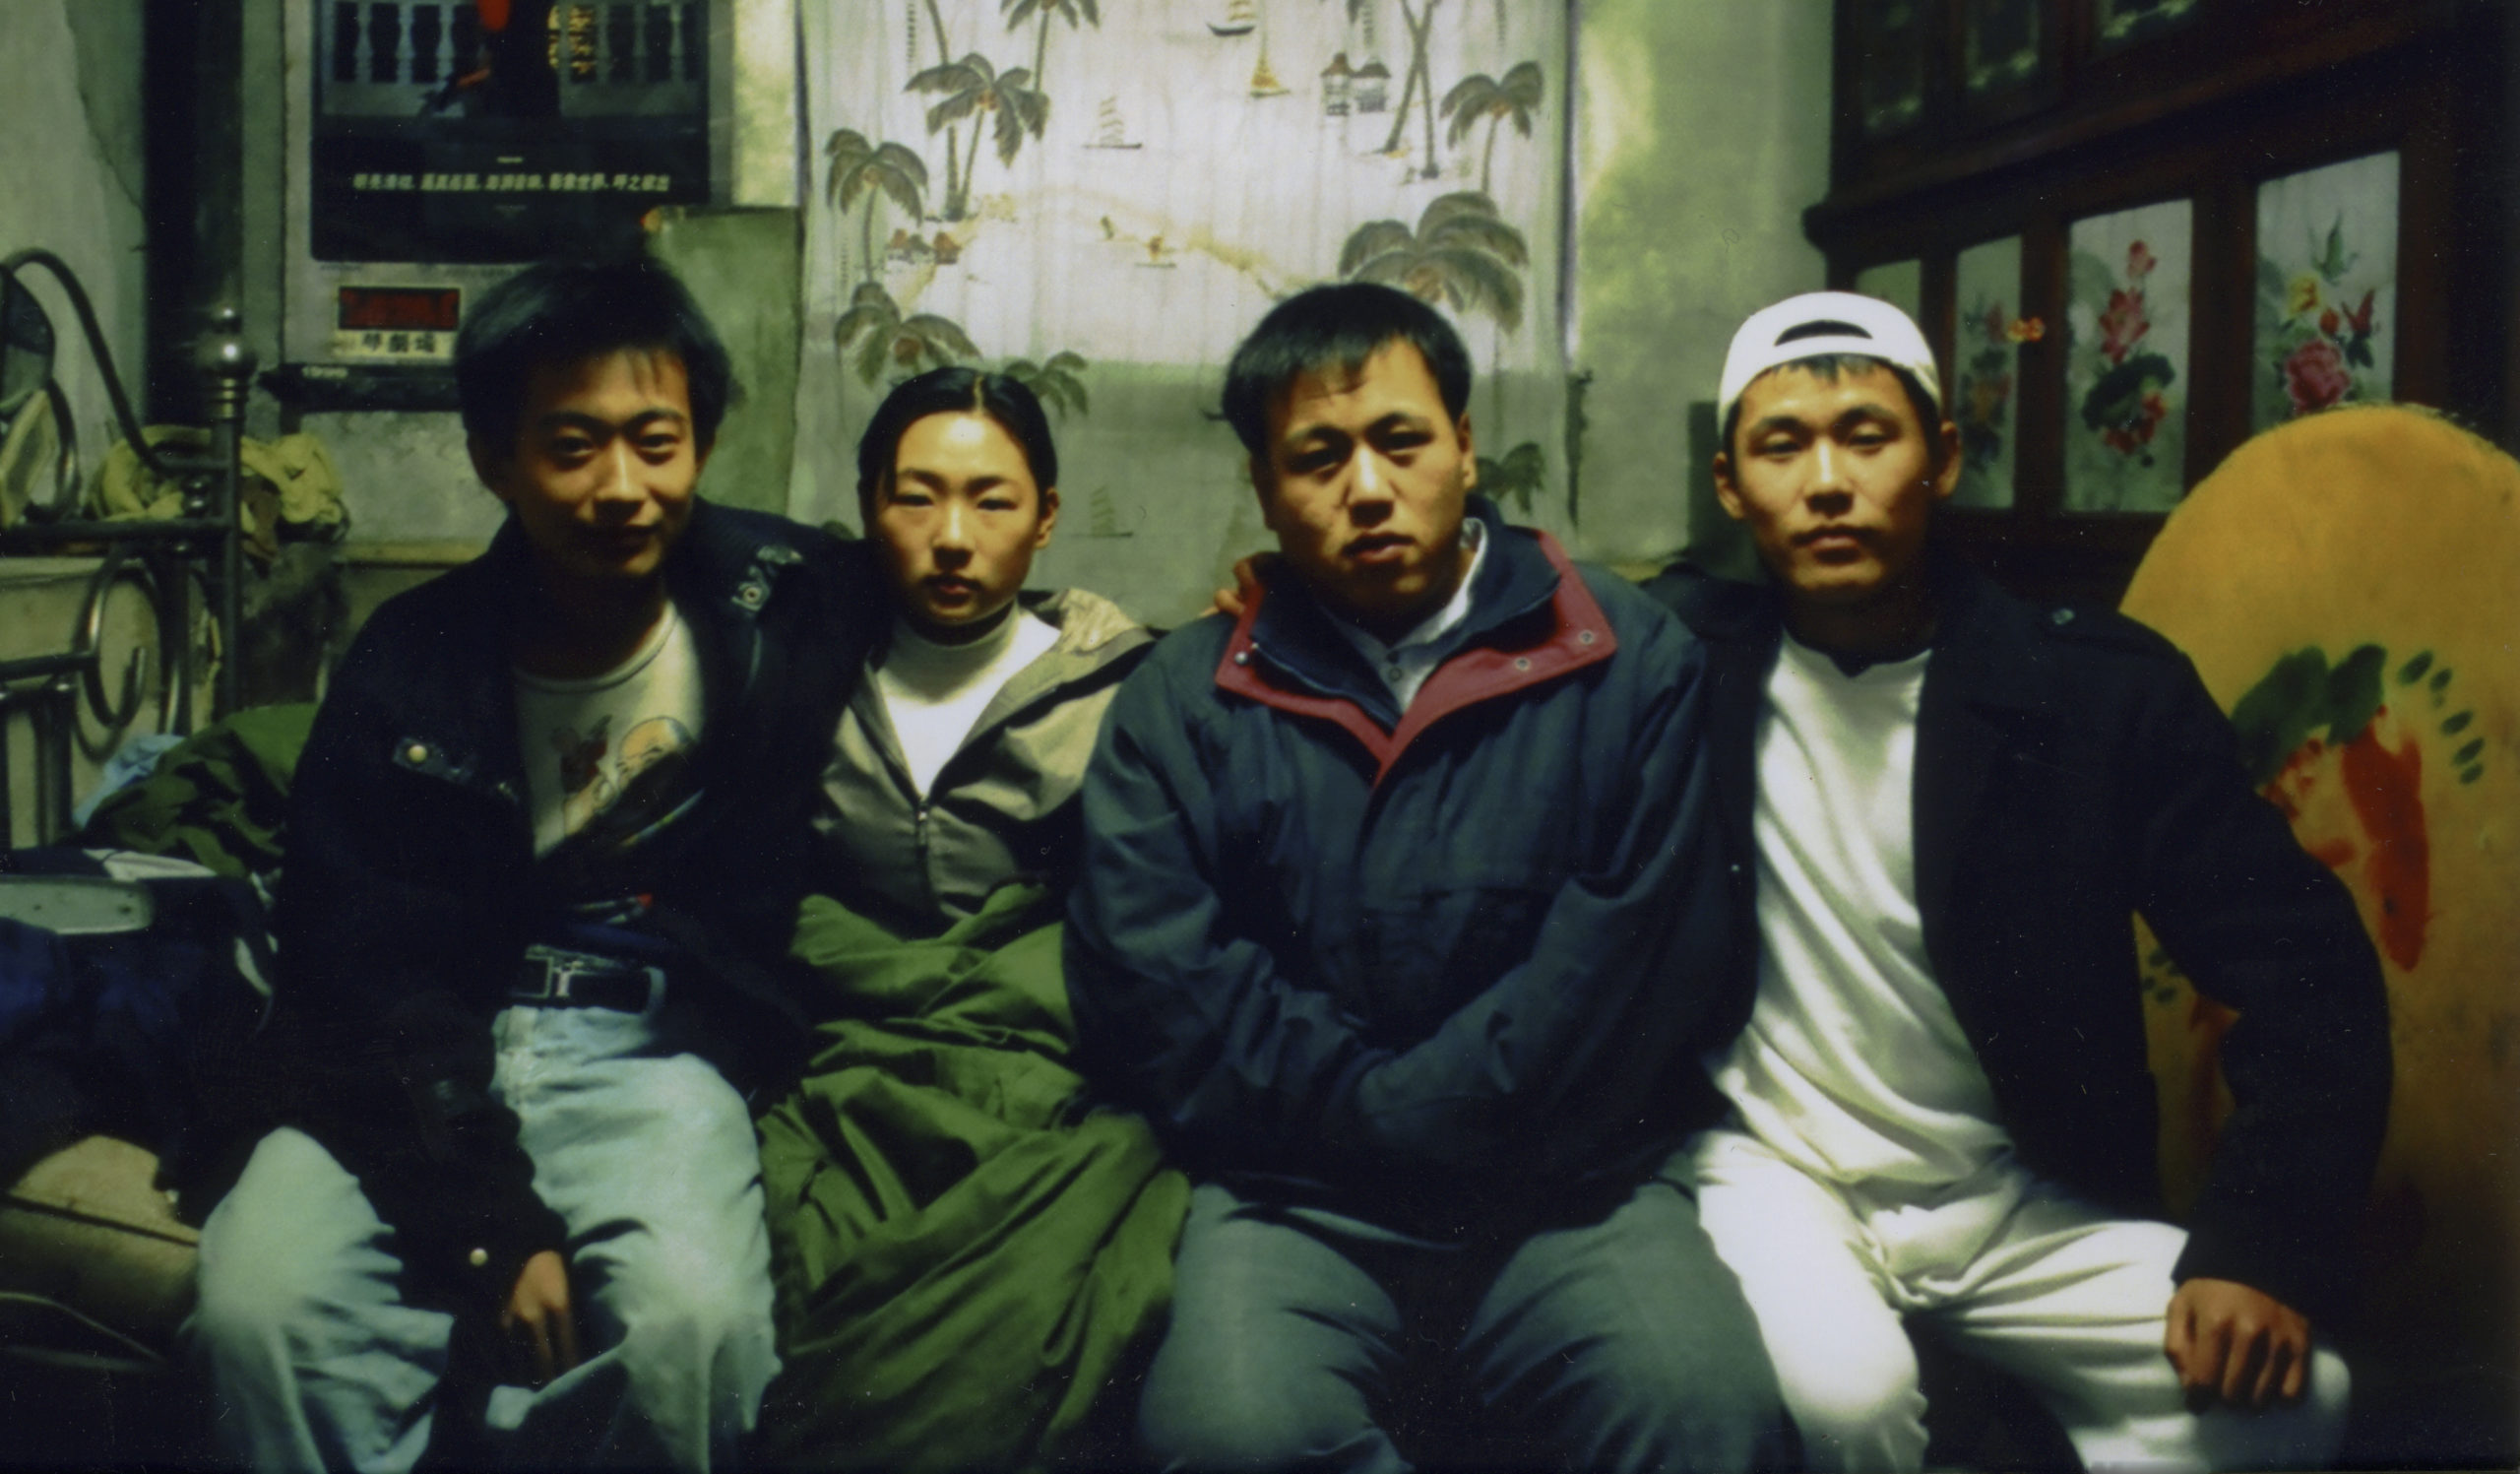 Wang Bing, West of Tracks 31-52 Rainbow Row workers’ quarter. Lao Shi’s neighbours, 2000, Courtesy PARIS-B, Detail